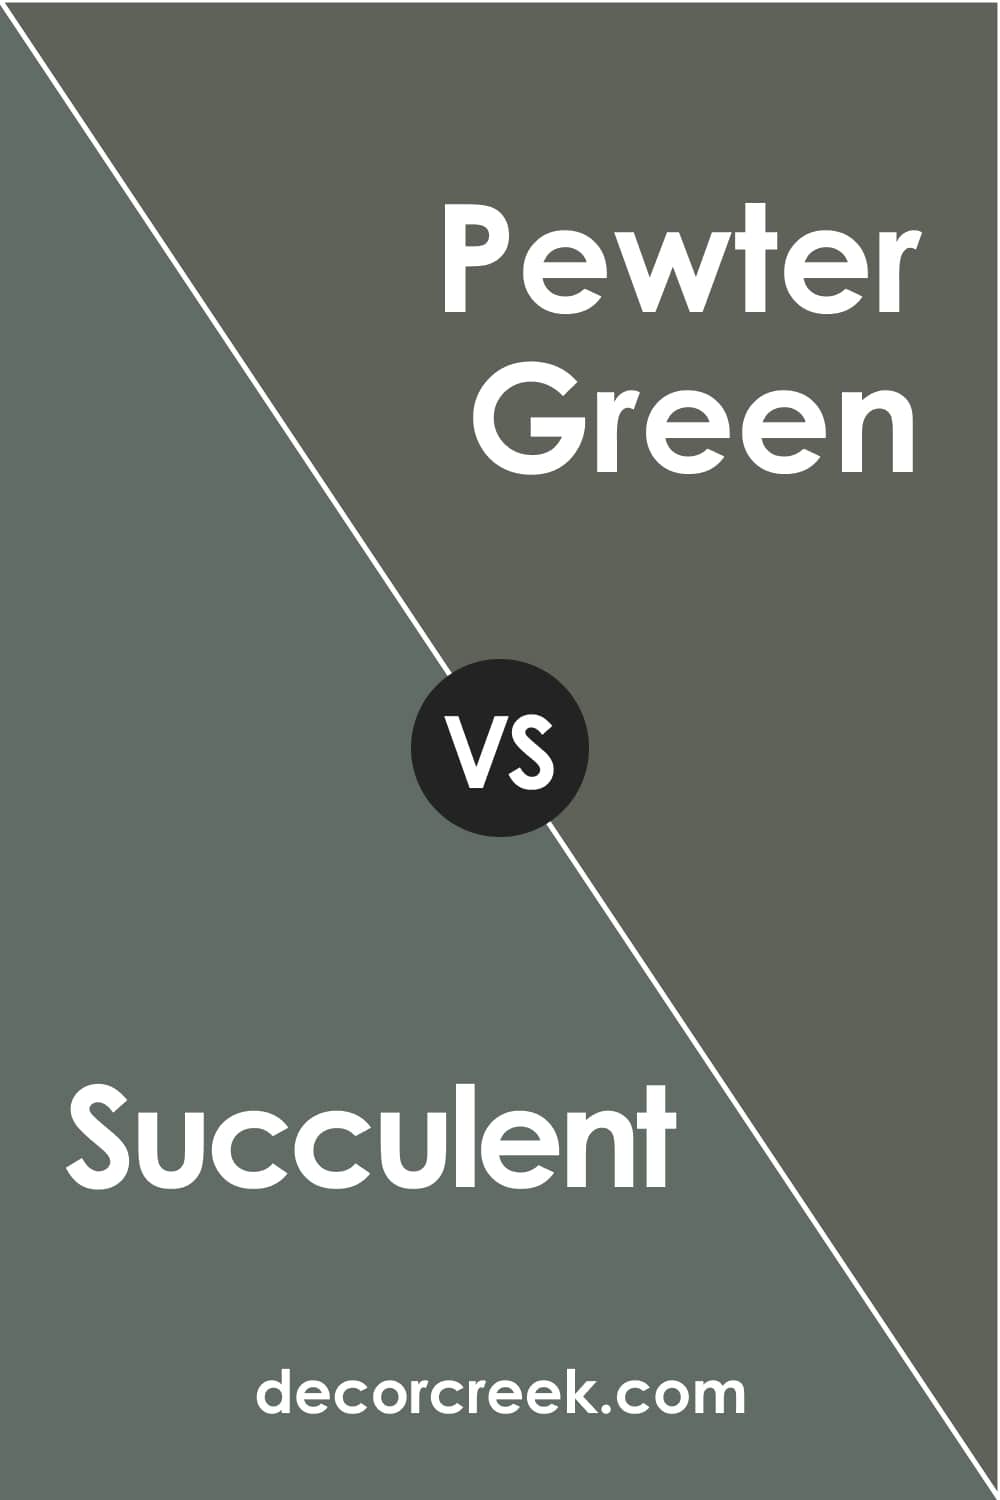 Succulent vs Pewter Green